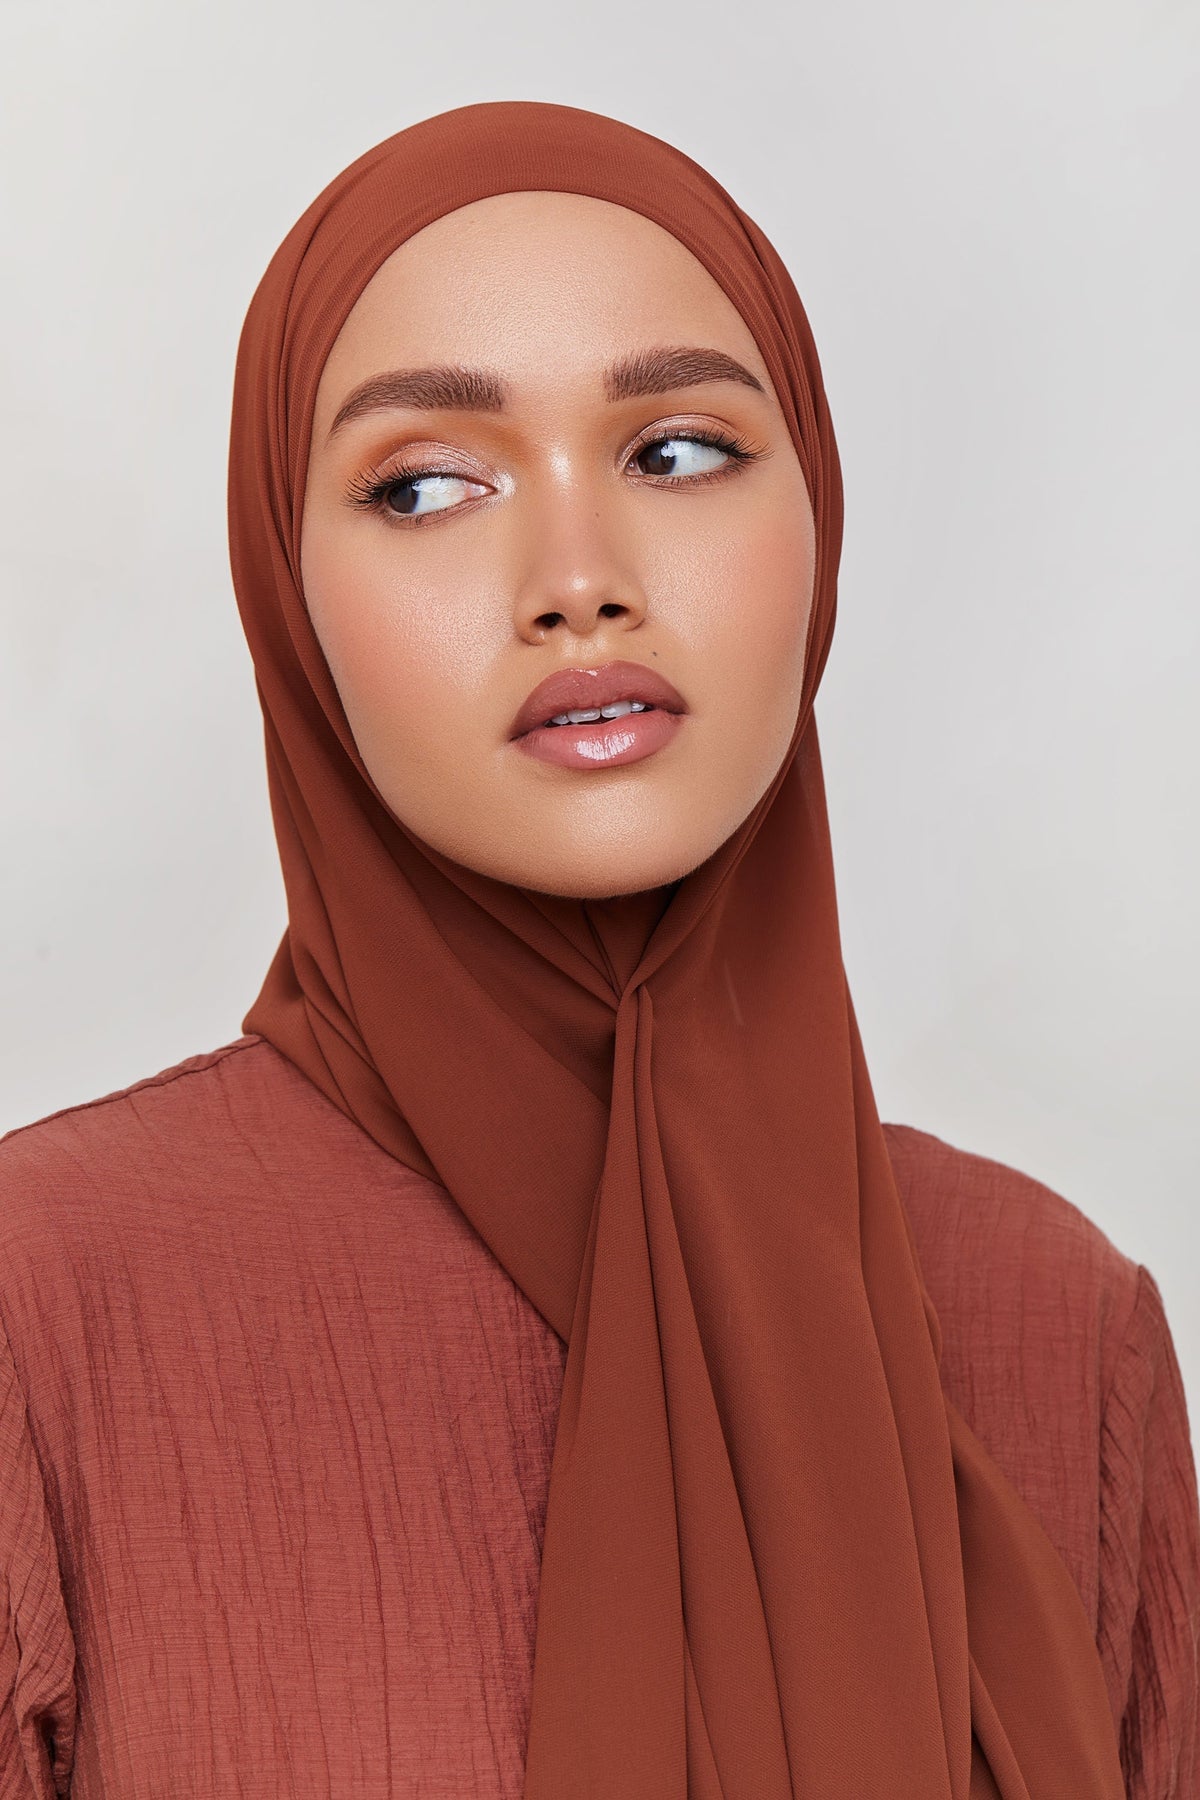 Chiffon LITE Hijab - Brown Out epschoolboard 